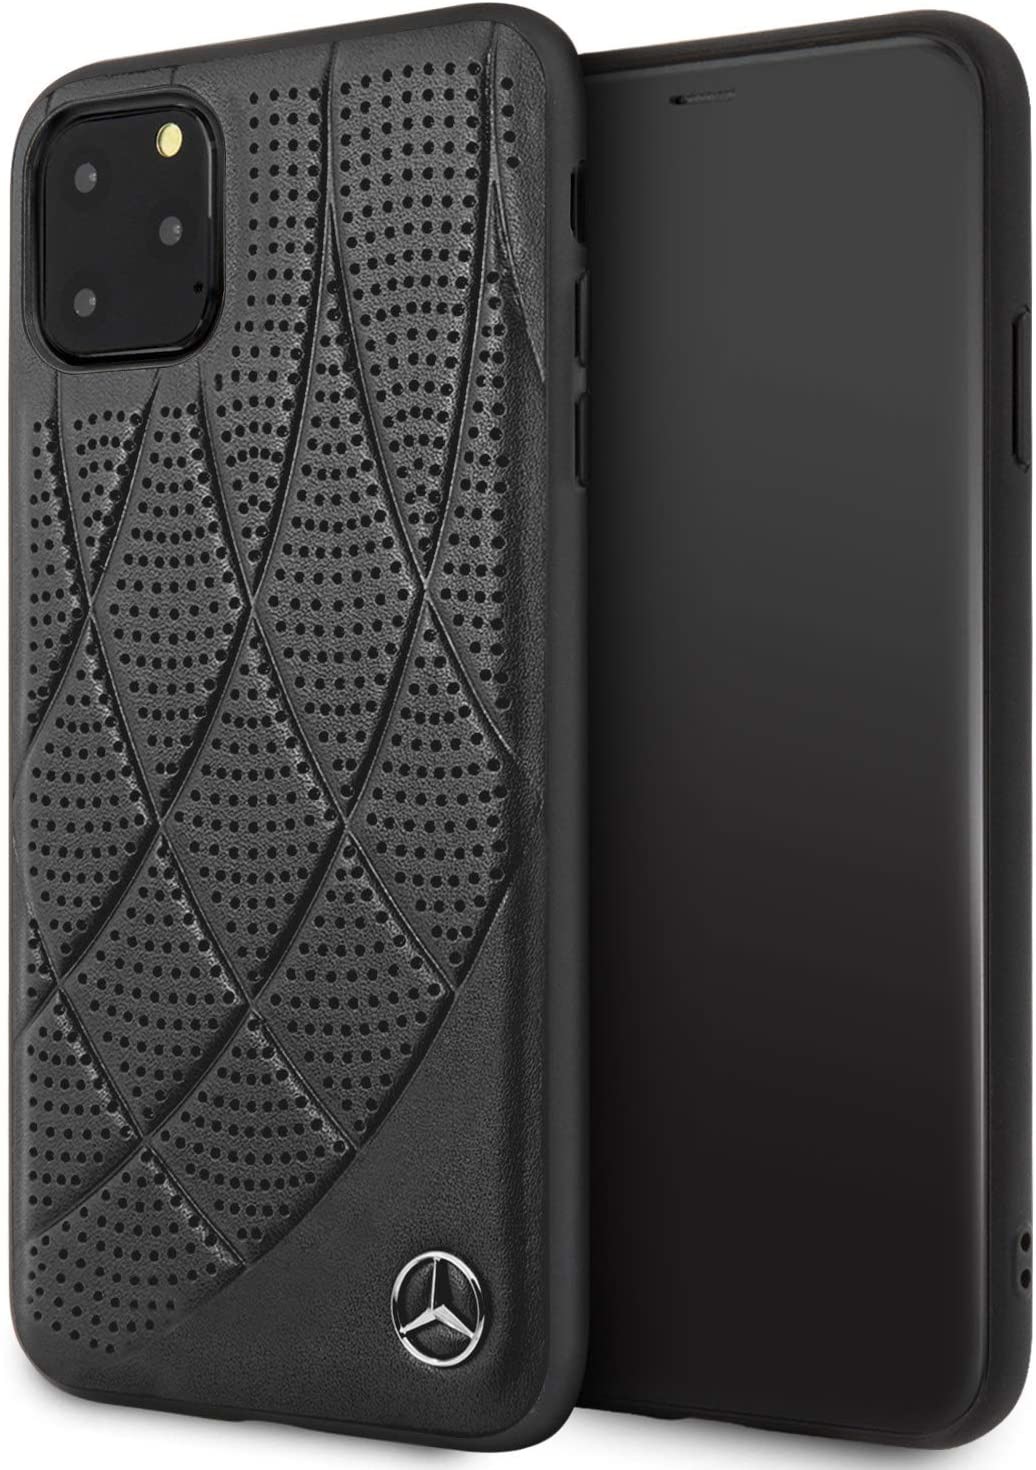 Husa Cover Mercedes Perforated Leather pentru iPhone 11 Pro Max, Negru thumb